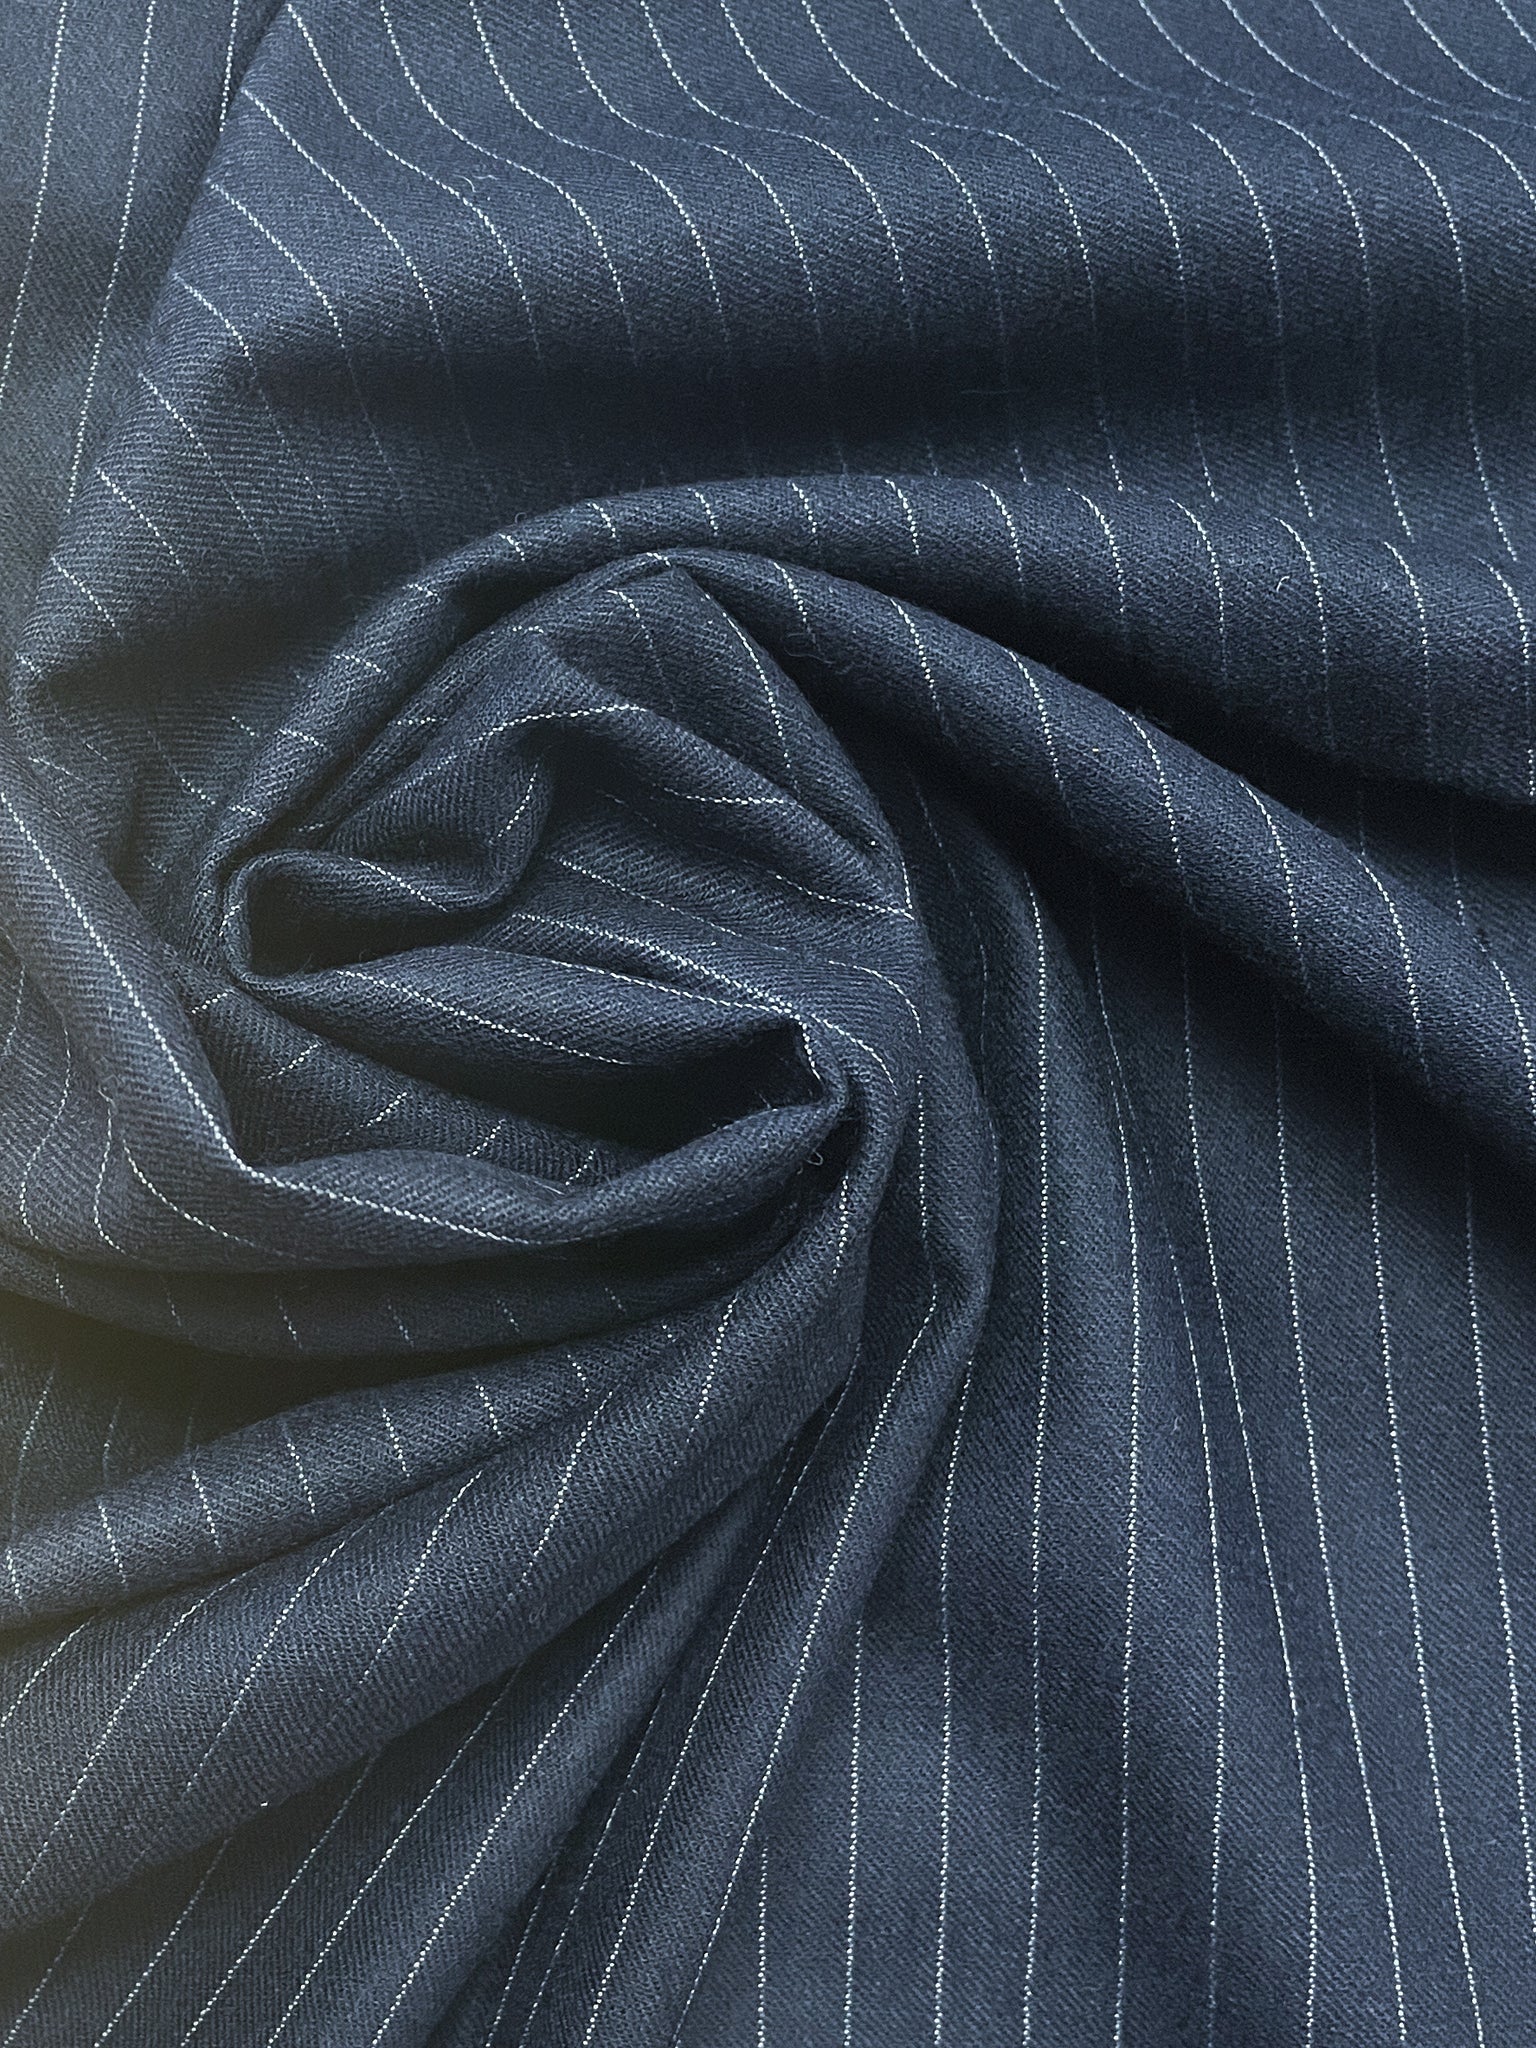 3 YD Wool Vintage - Navy Blue with Pinstripes